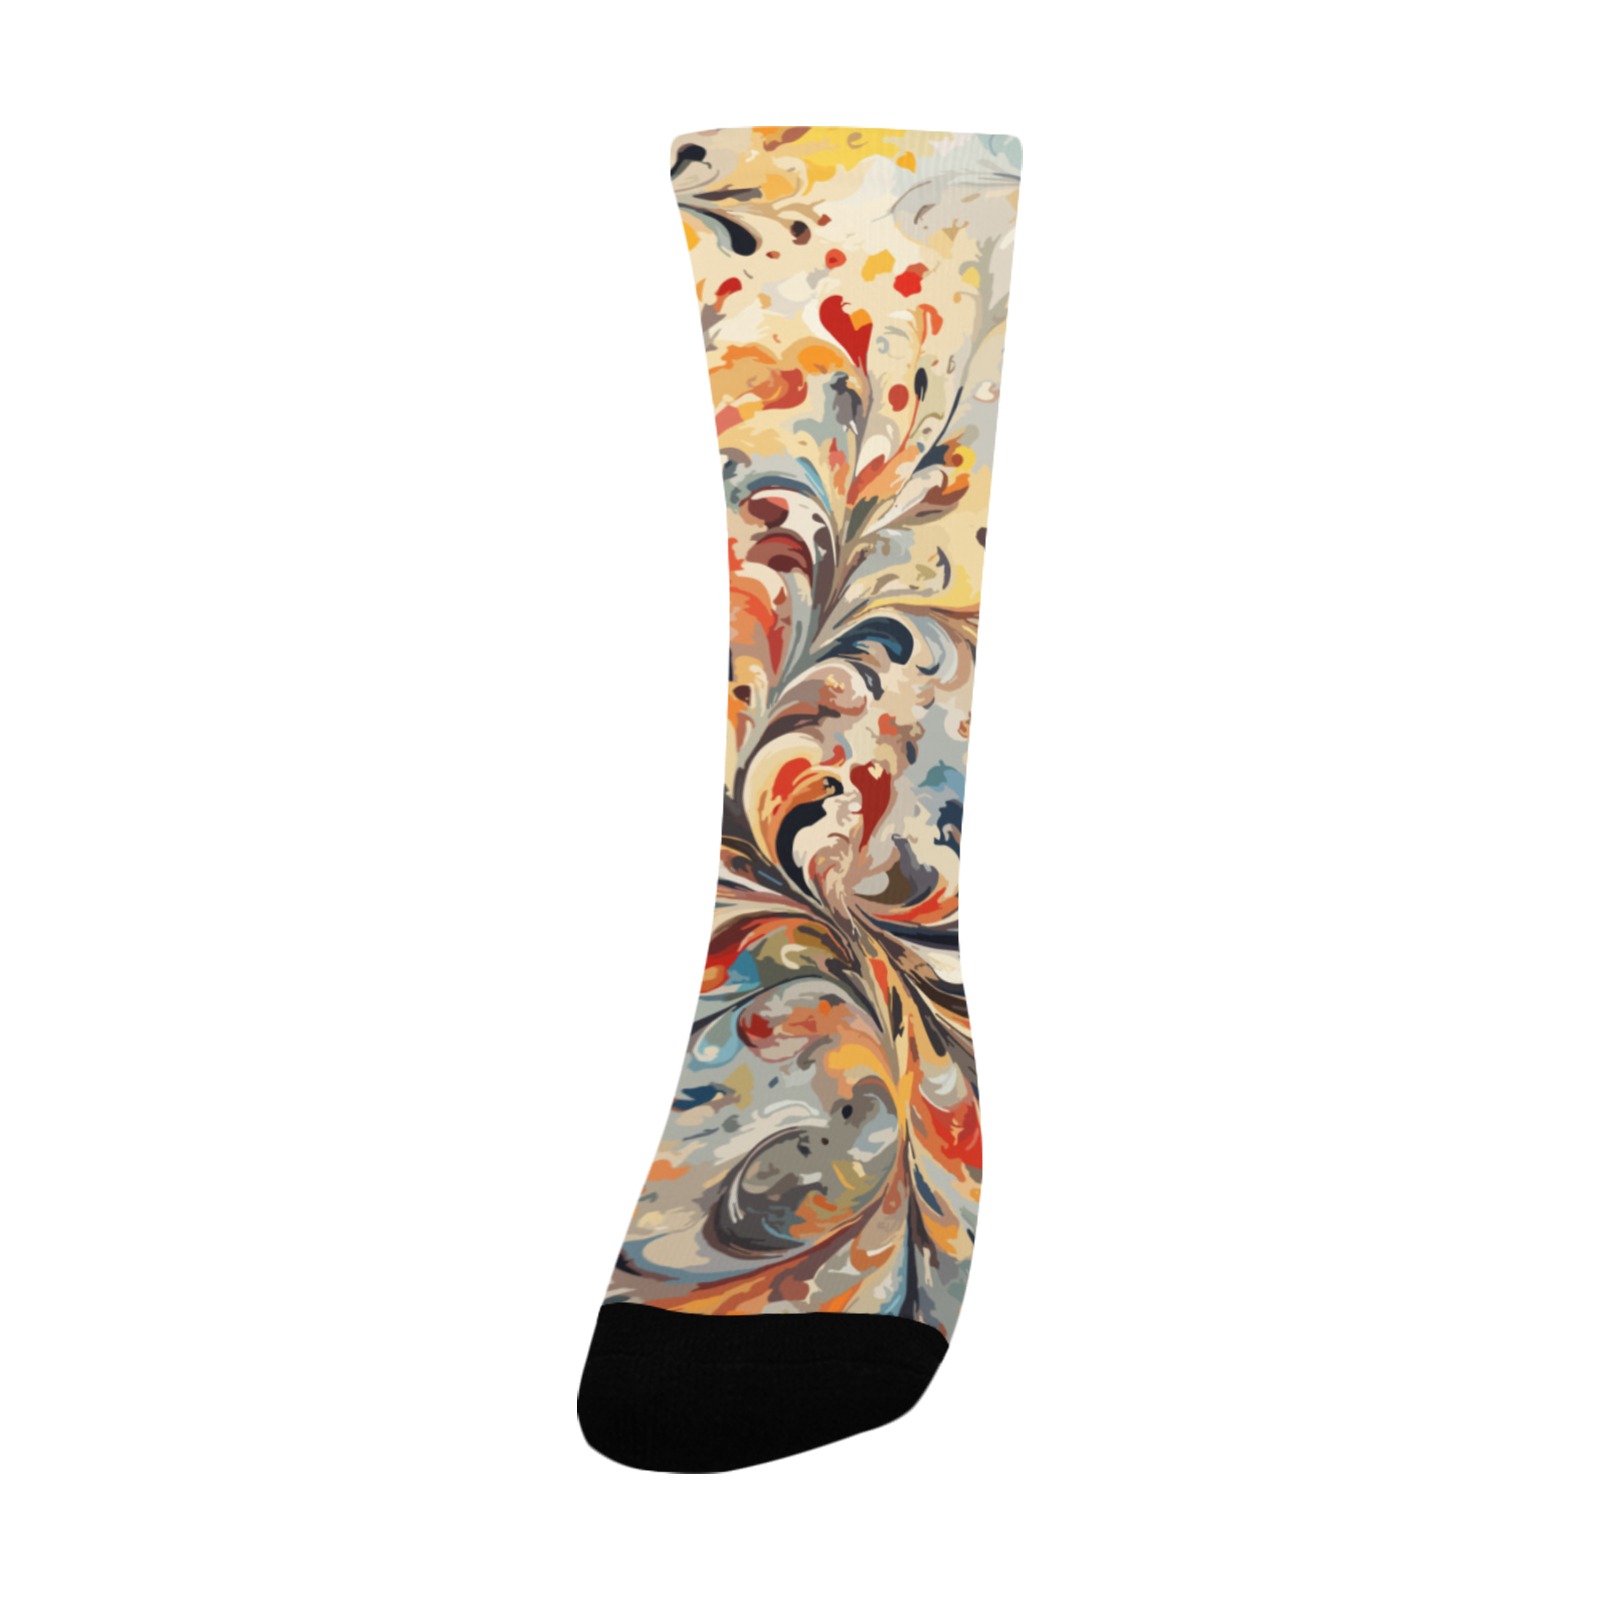 Stylish floral ornament. Beautiful colorful art Custom Socks for Women